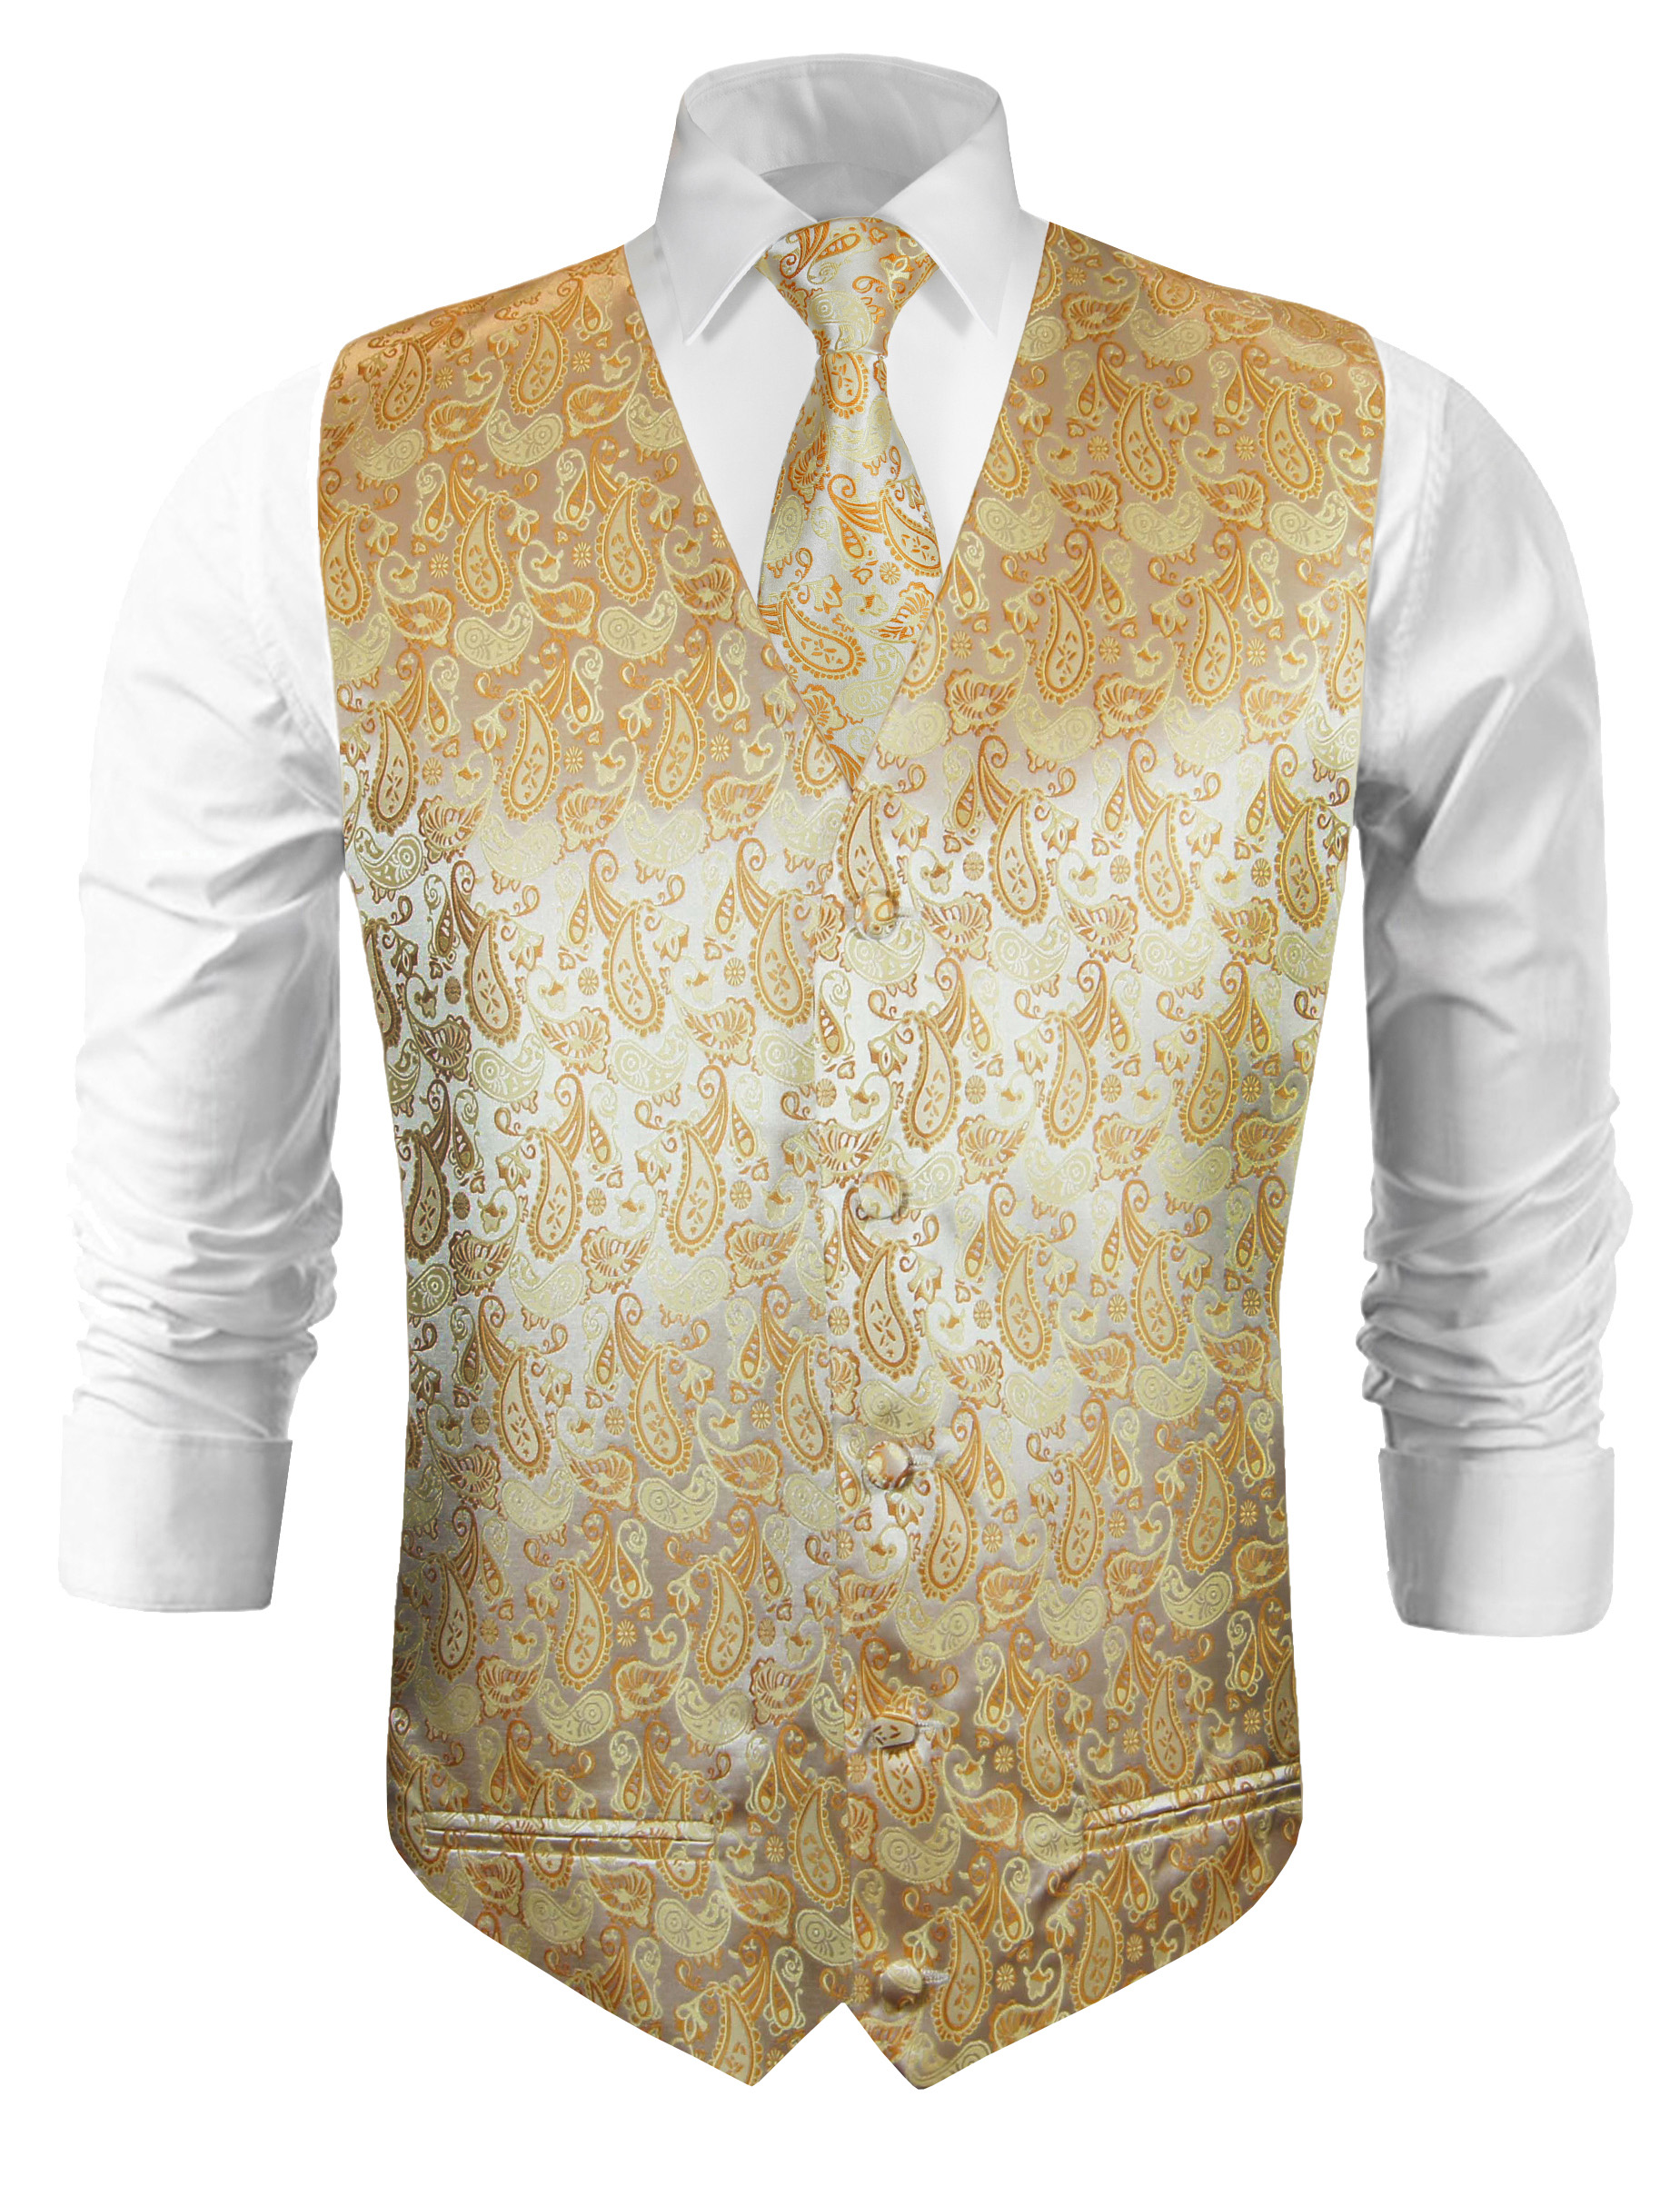 Festliche Weste mit Krawatte creme gold paisley v16 - Paul Malone Shop | Breite Krawatten